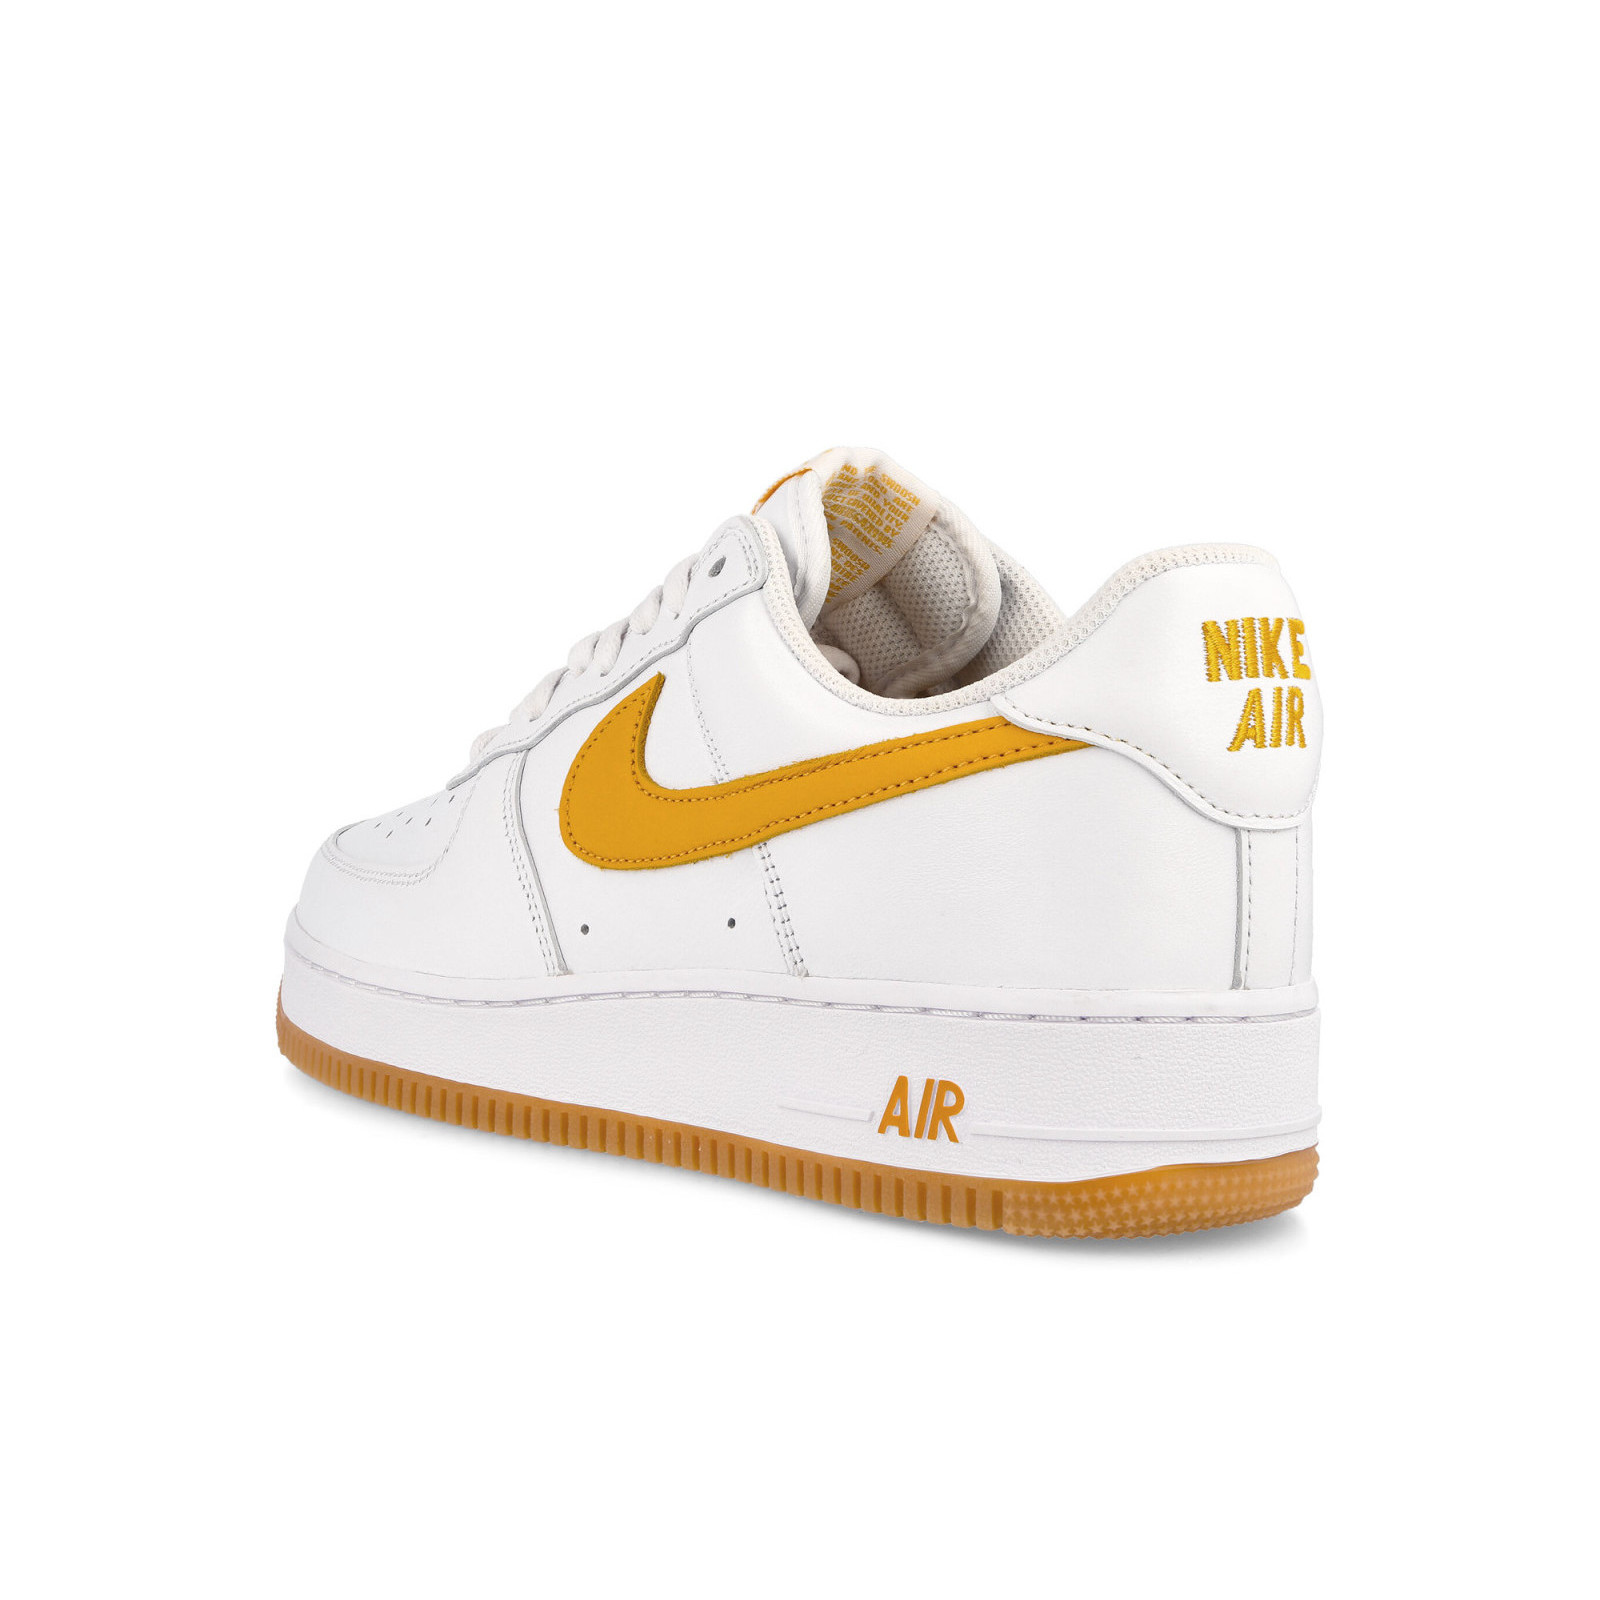 Nike Air Force 1 Low Retro QS
White / University Gold